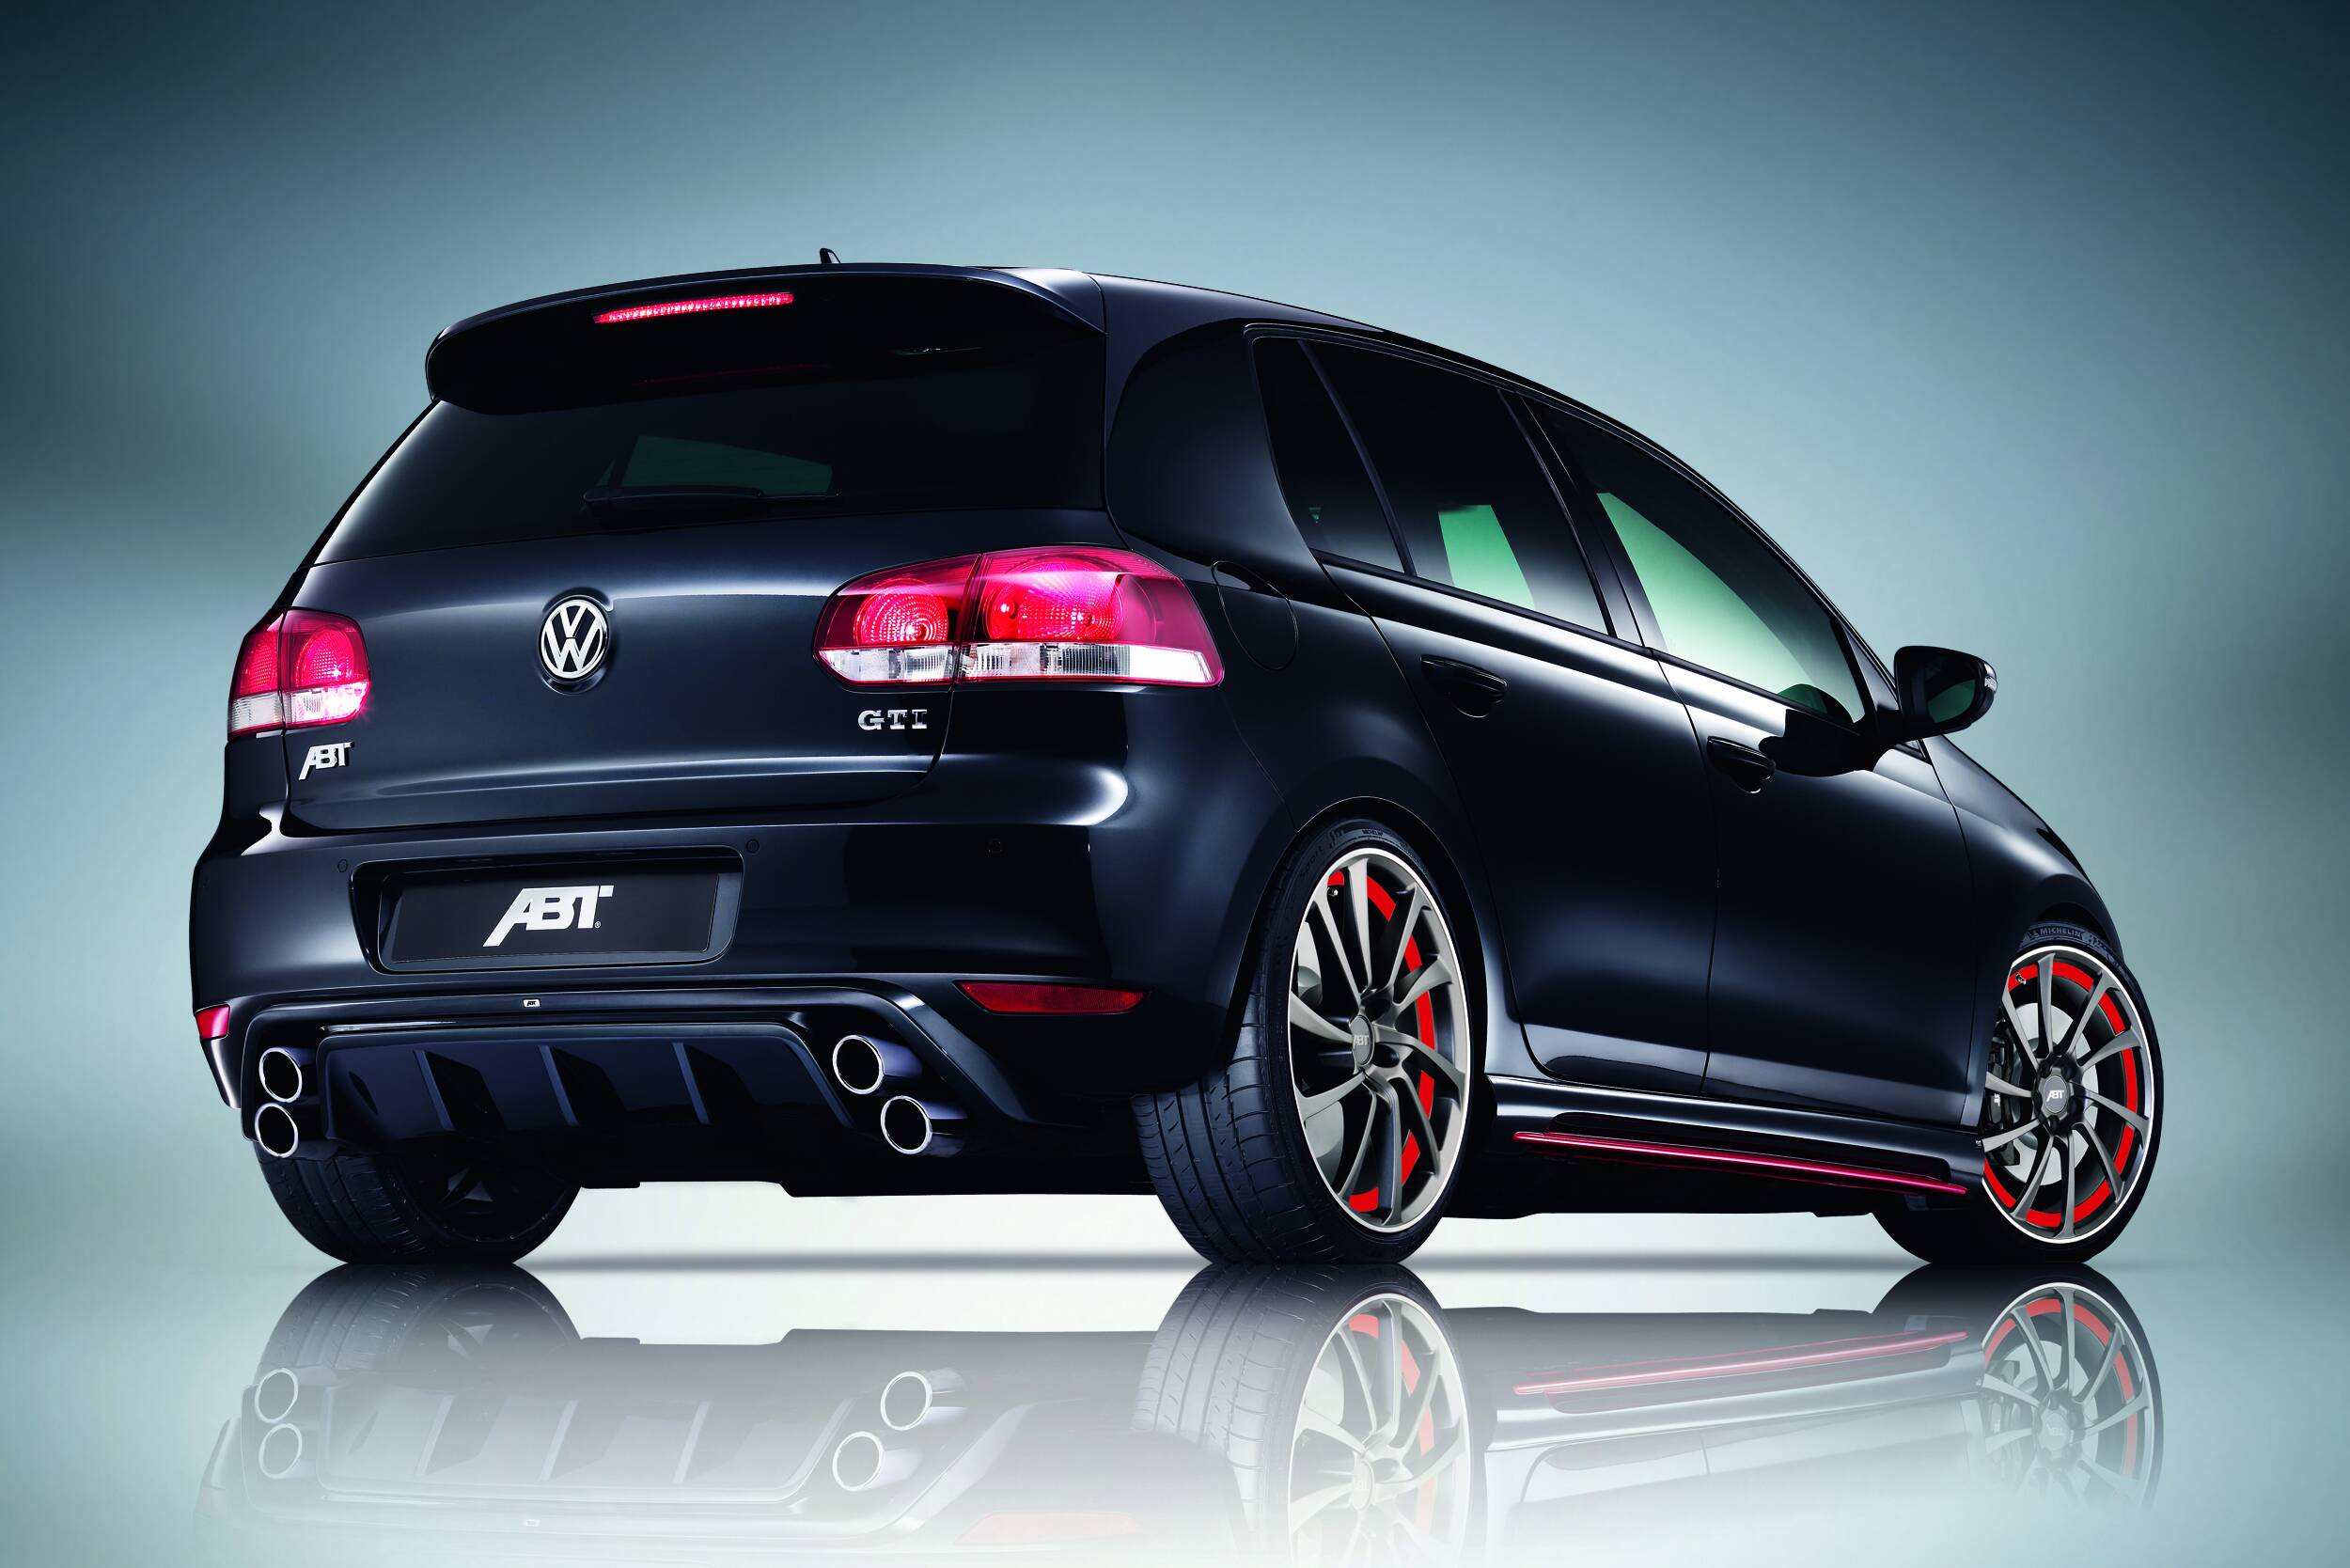 Essen Motor Show 2012 – ABT Golf VI GTI “Last Edition” - Audi